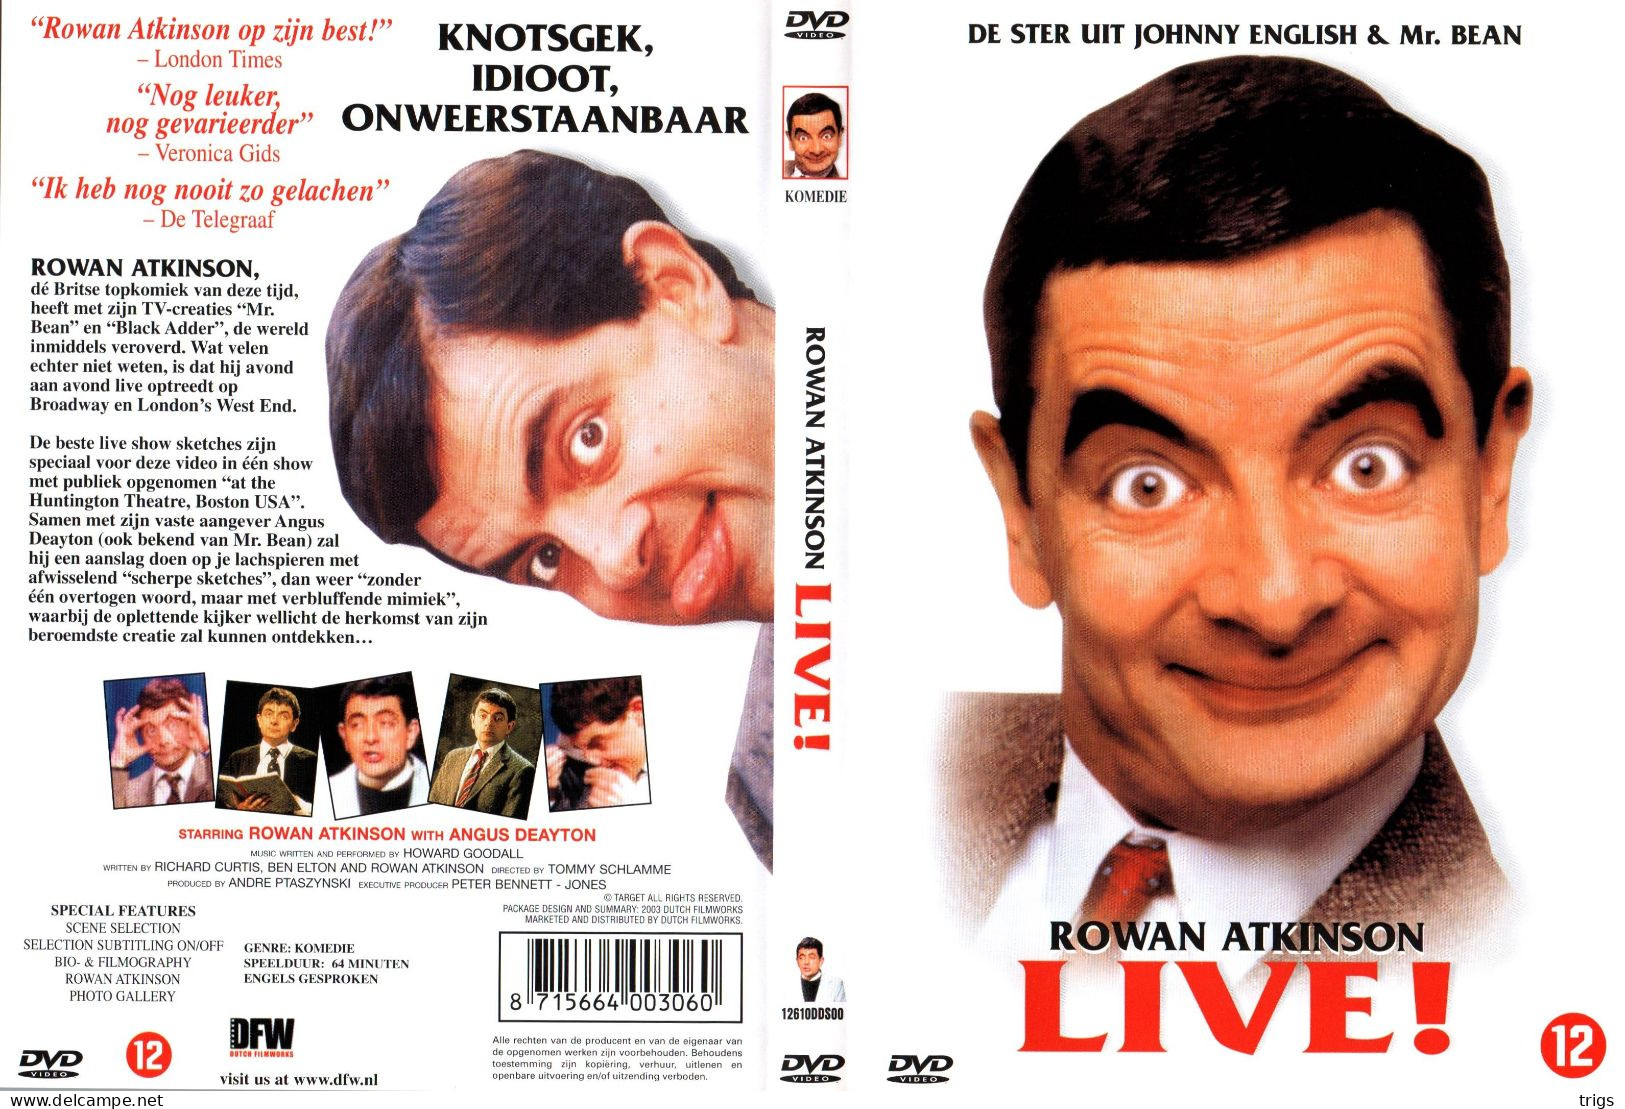 DVD - Rowan Atkinson Live! - Comedy